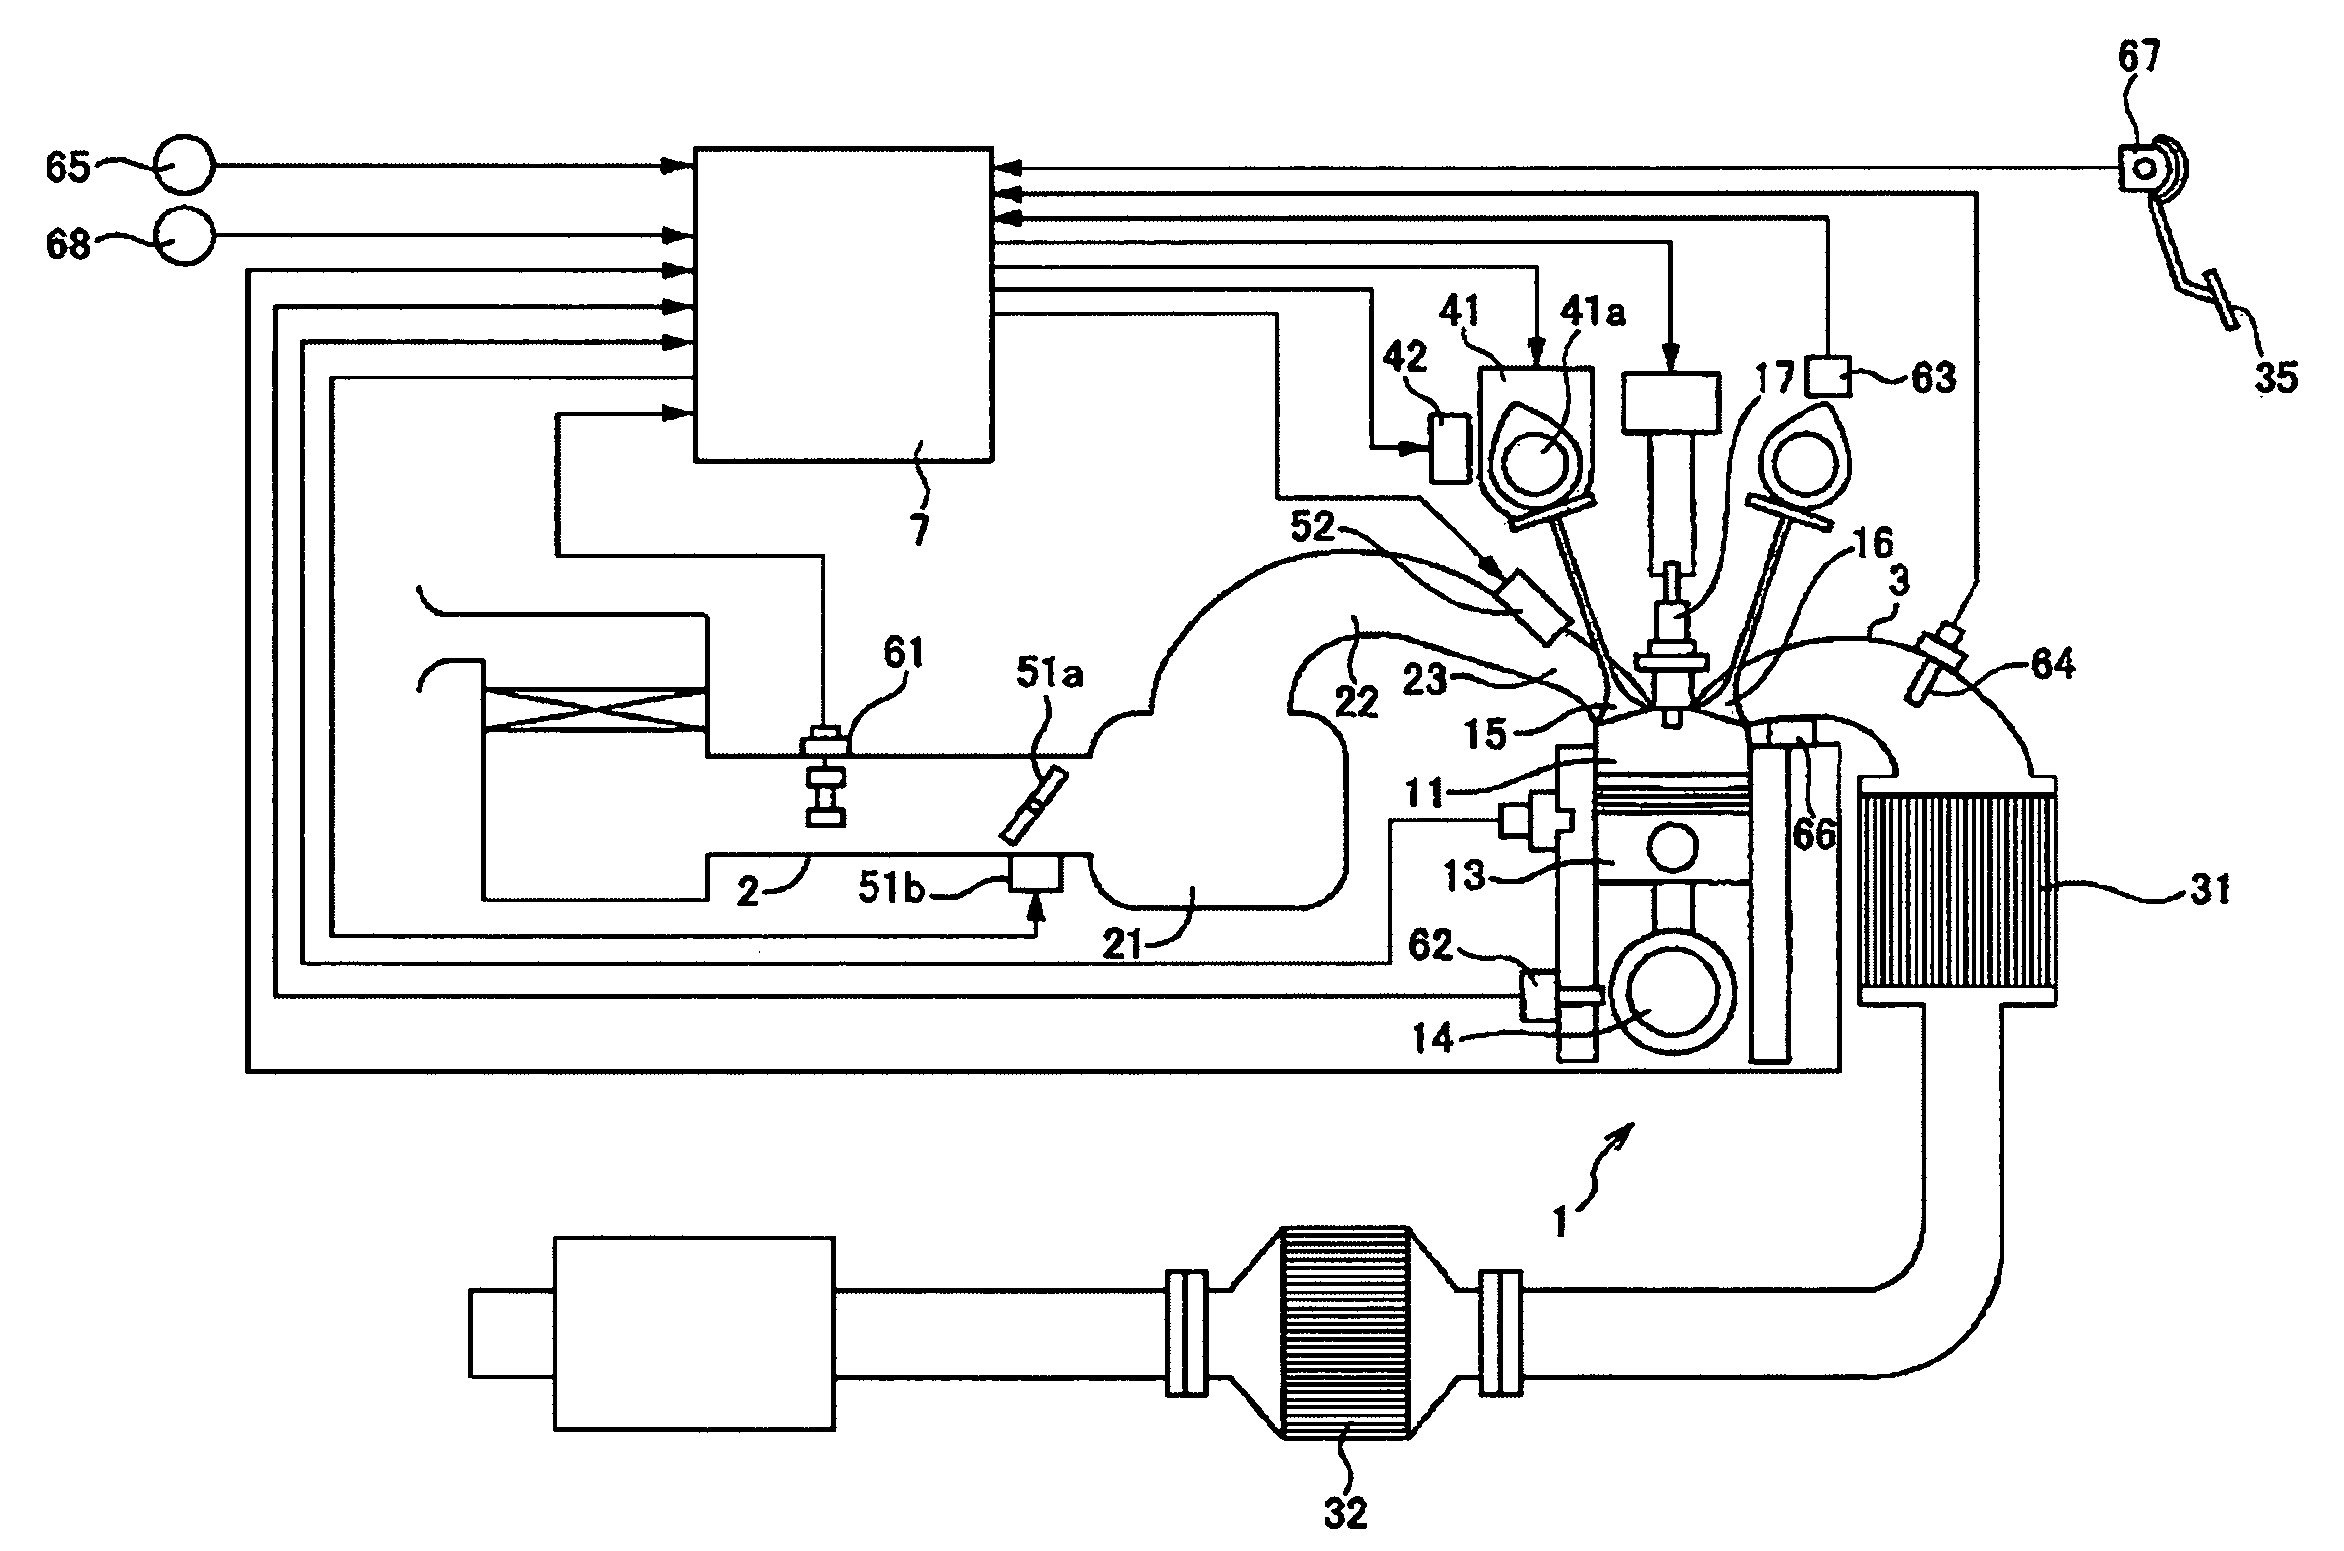 Engine start control apparatus and method